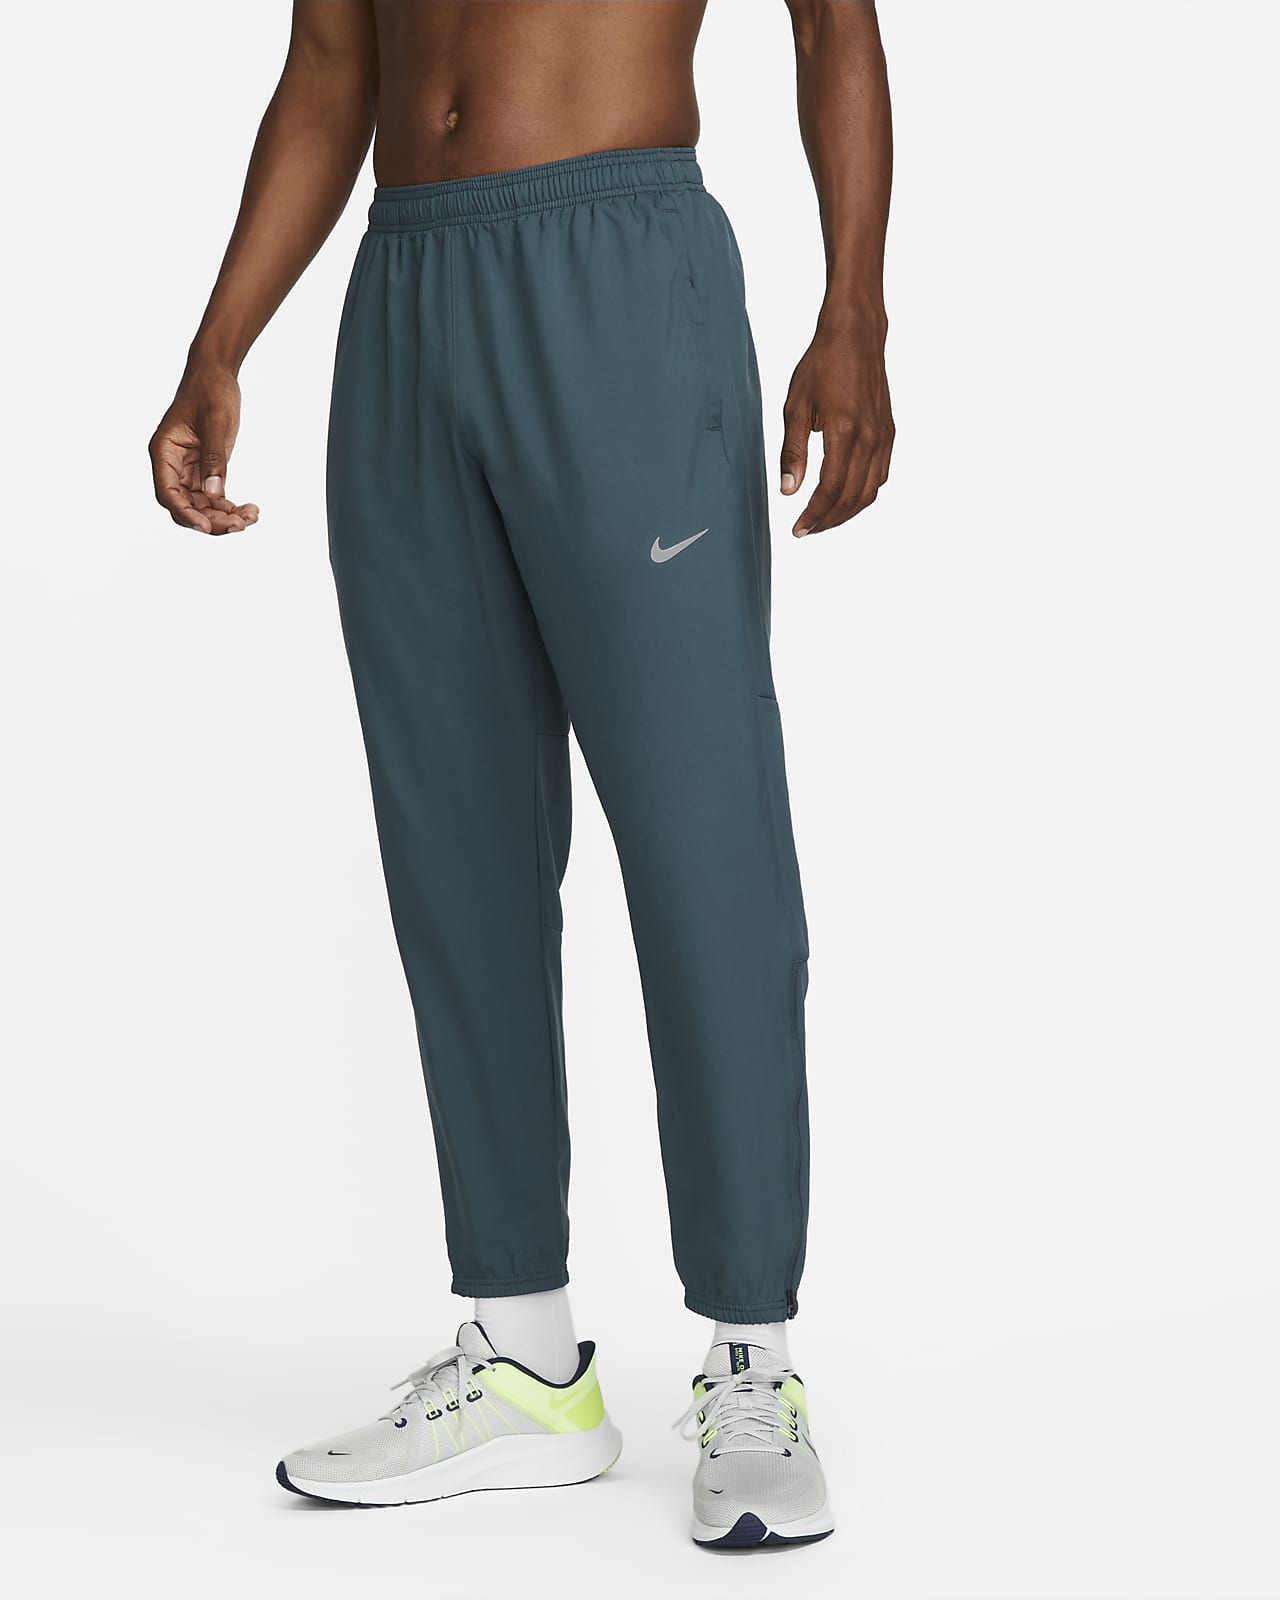 Nike Dri-FIT Challenger Men's Woven Pants.